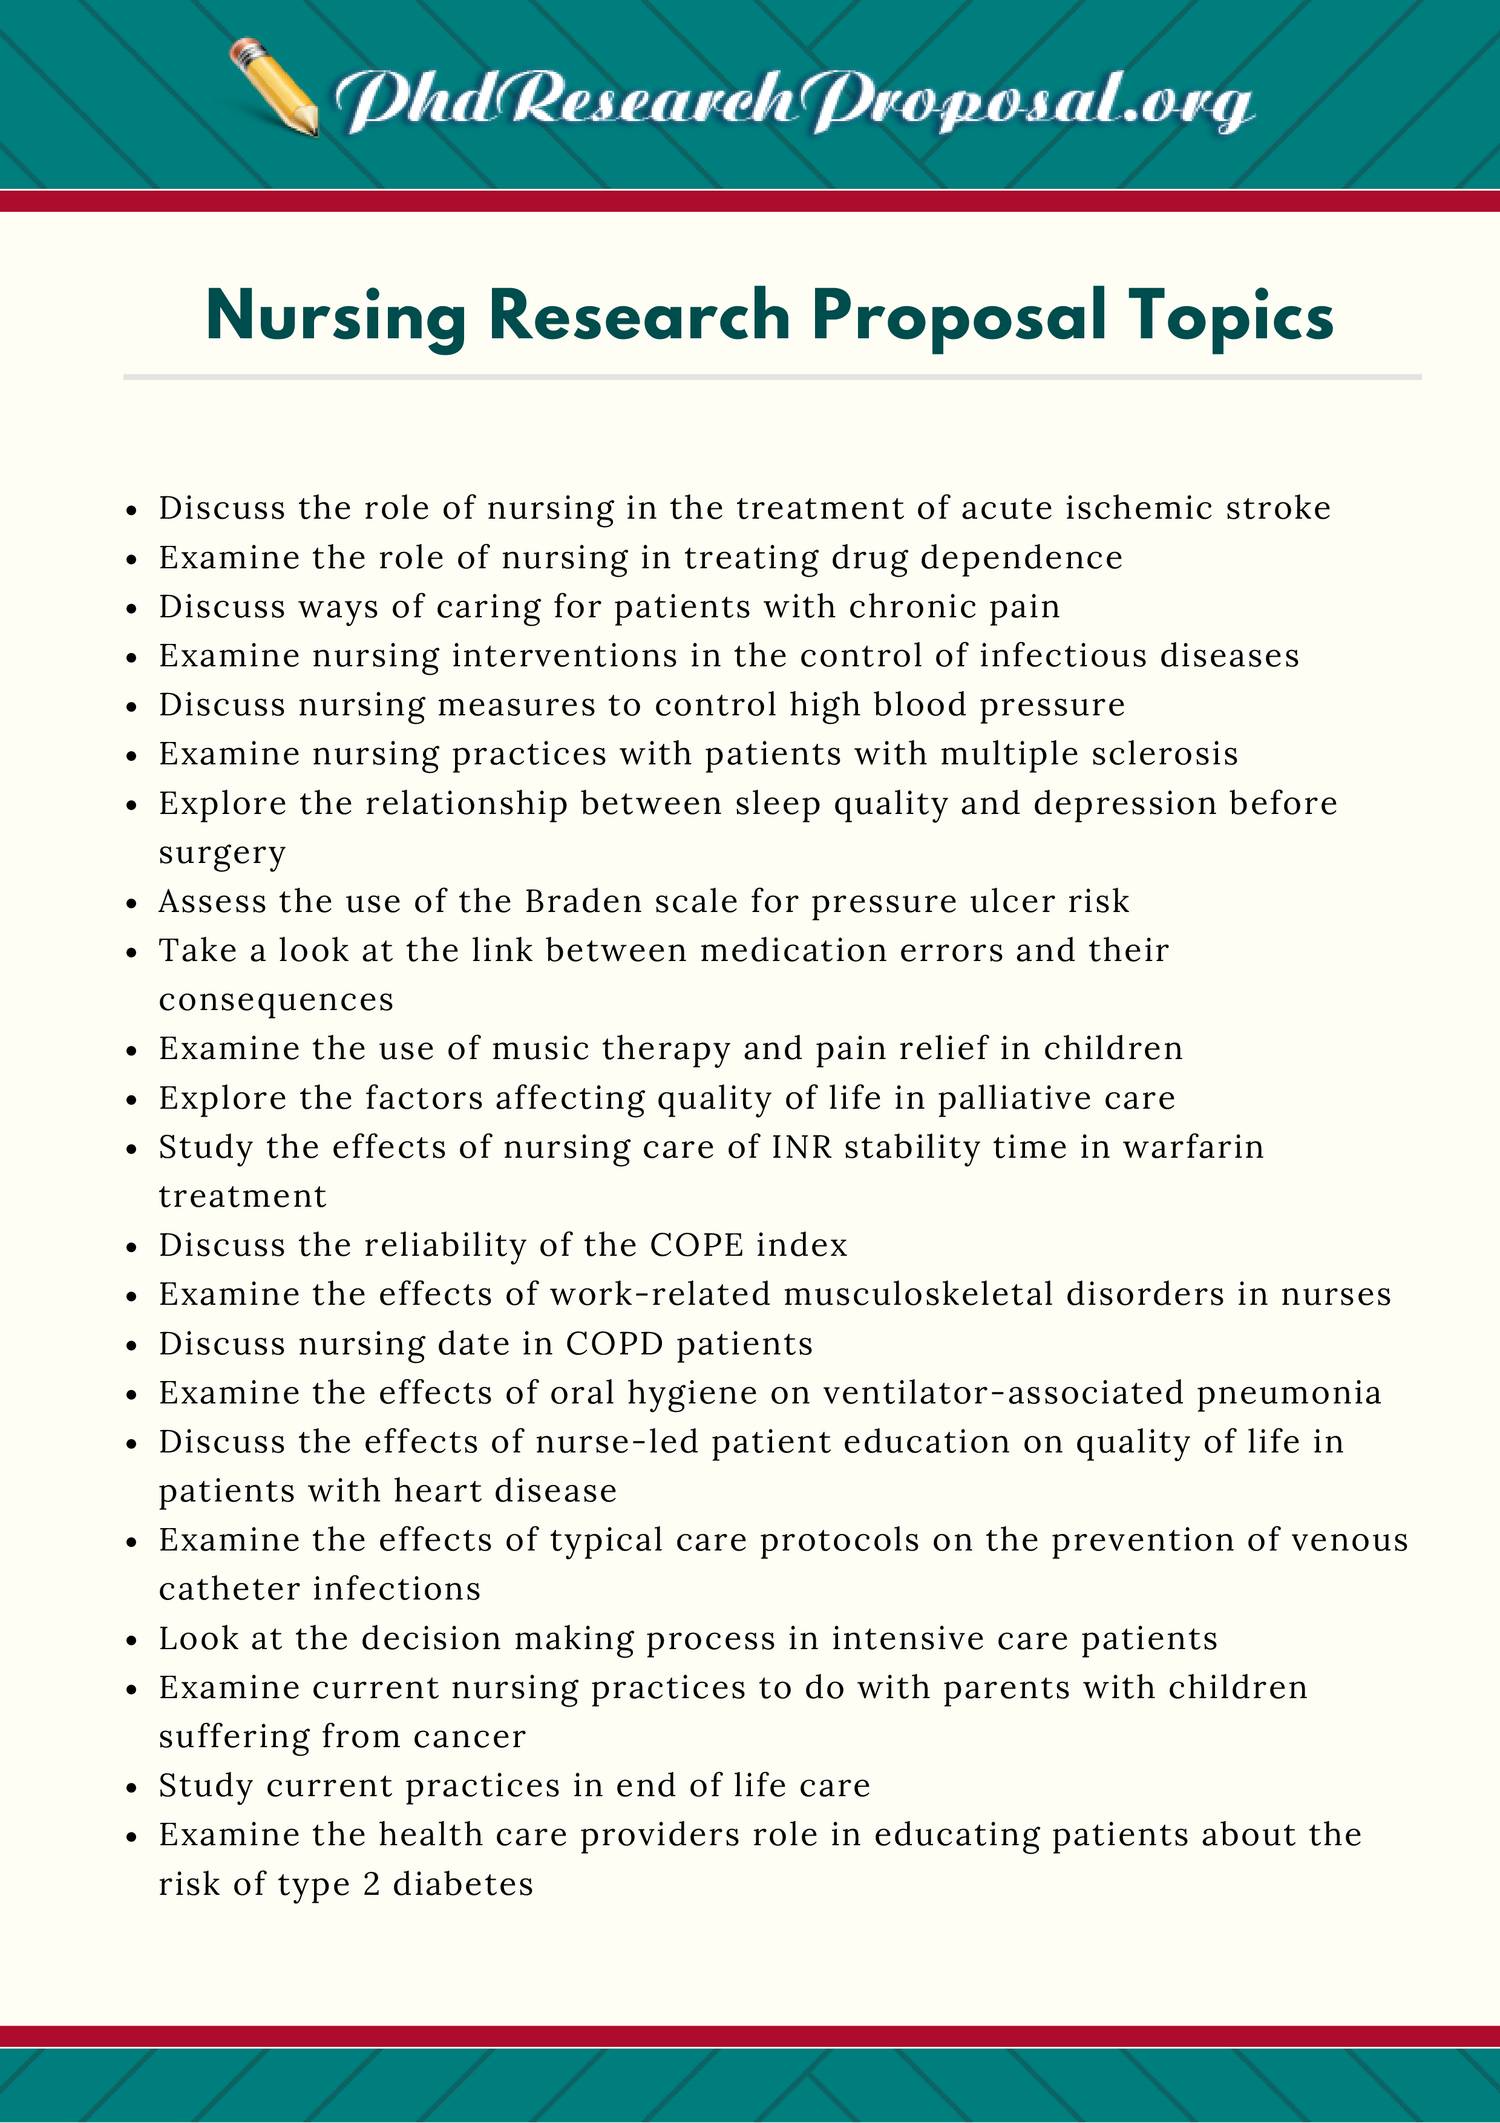 pediatric nursing research topics pdf